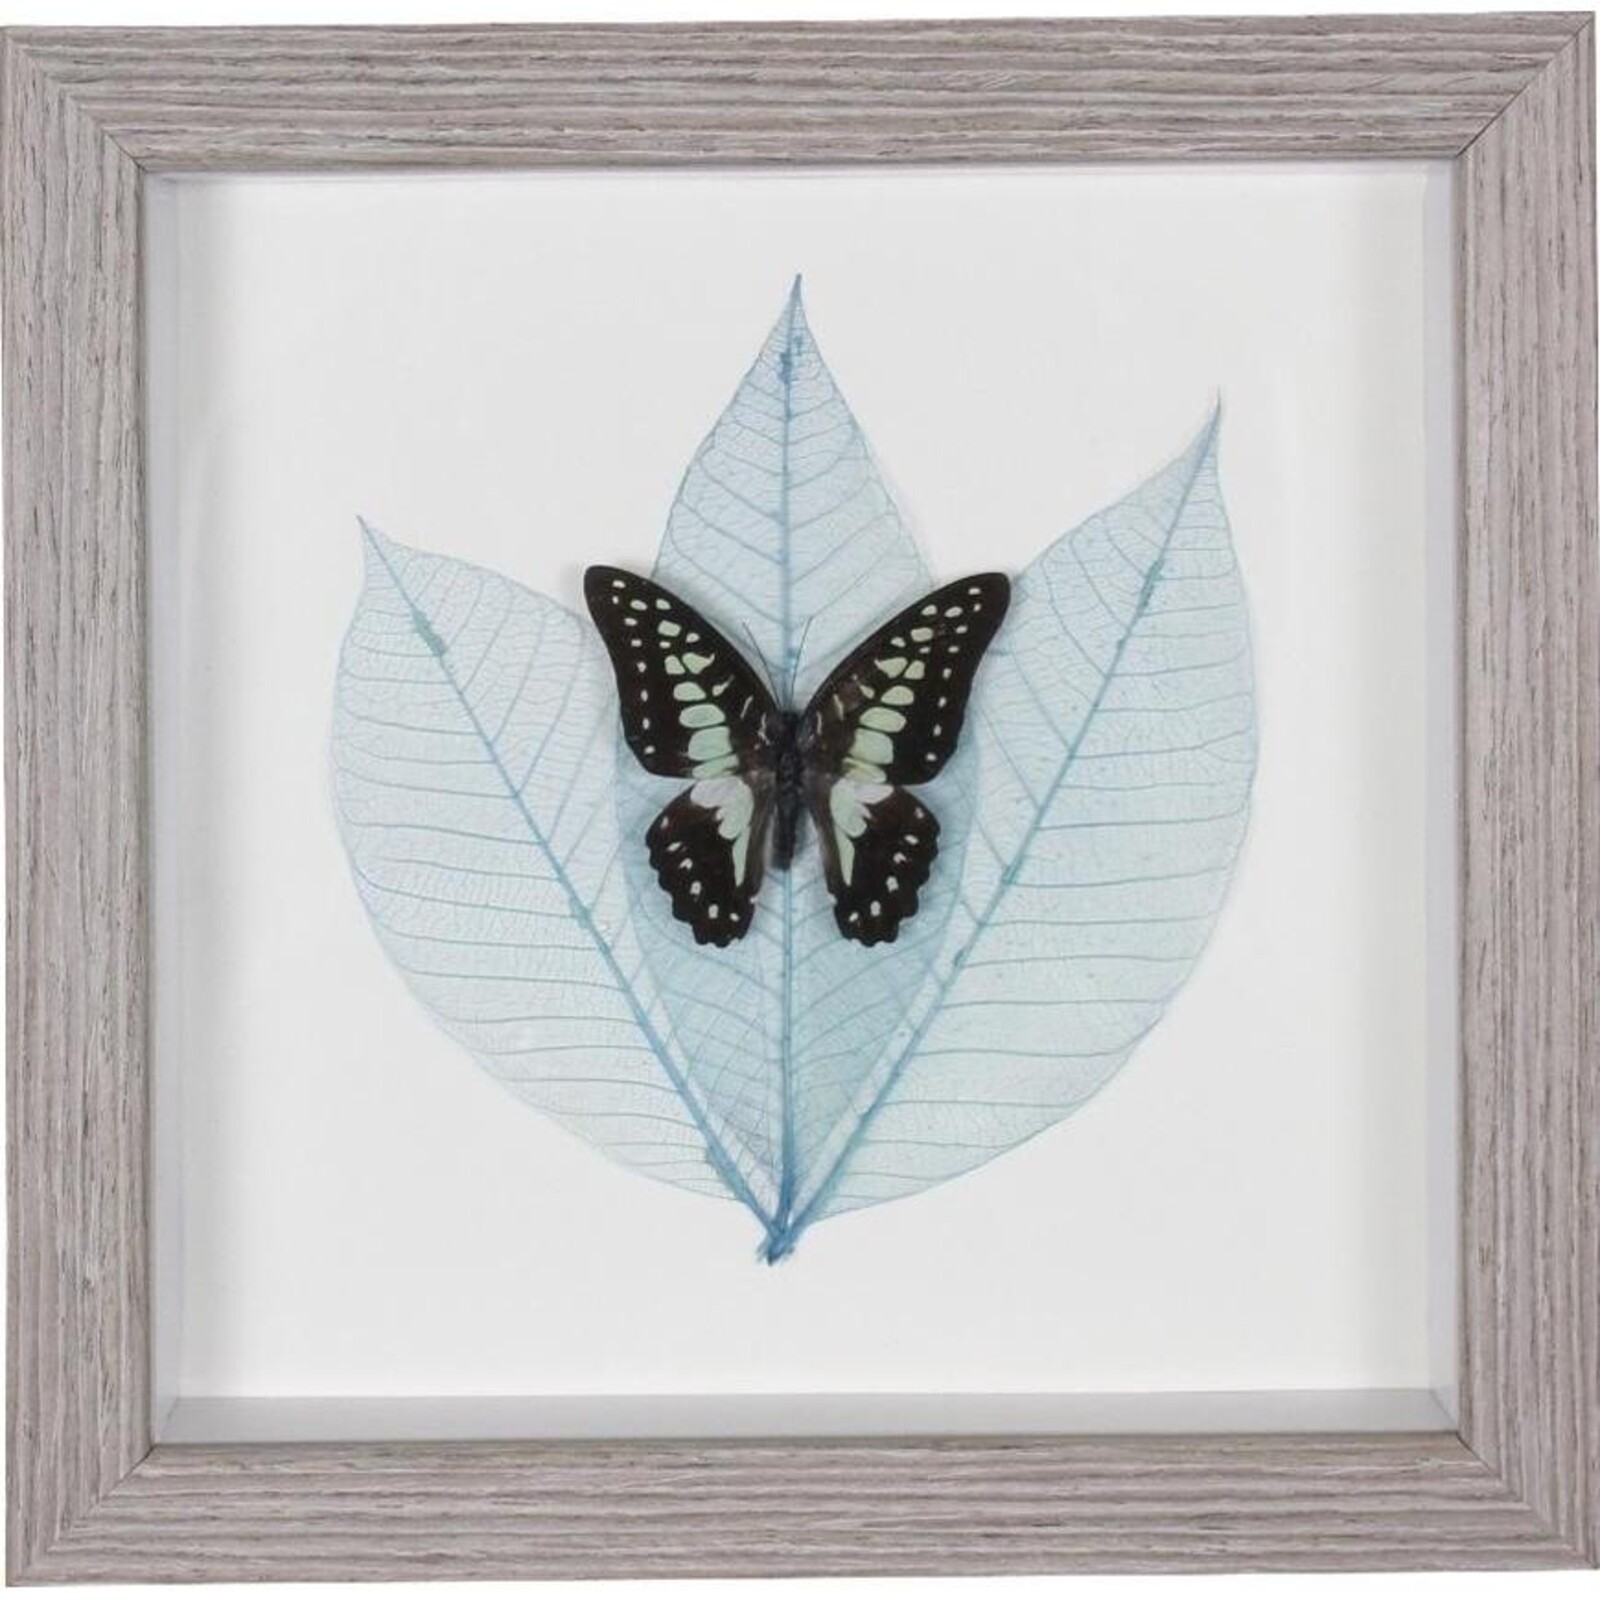 Framed Butterfly Wall Art 4